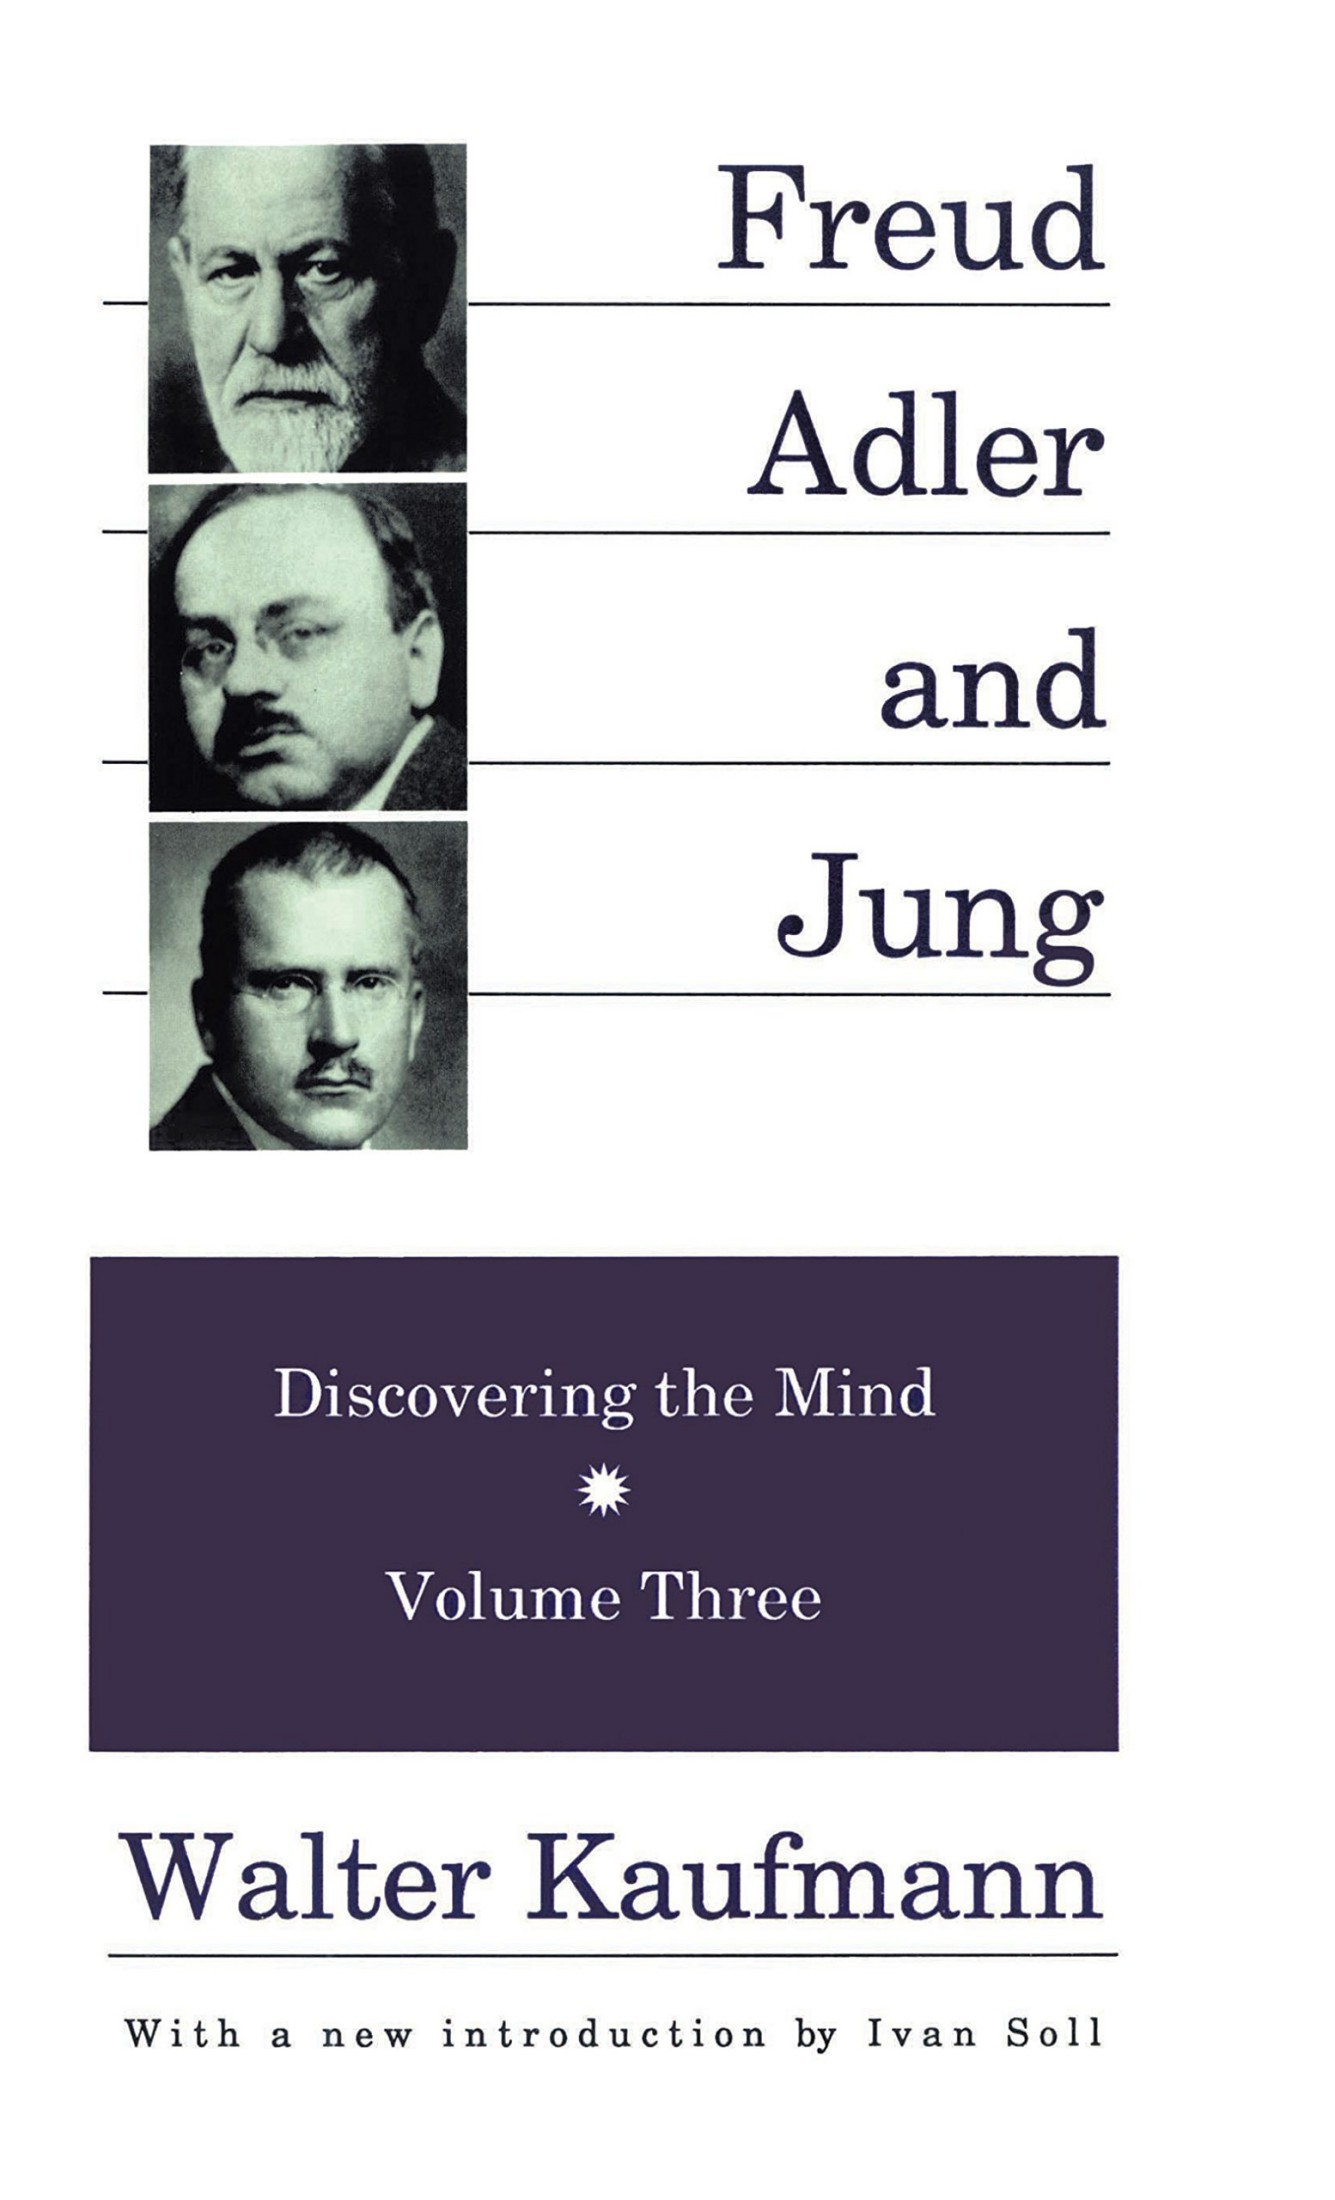 Discovering the Mind: Freud Versus Adler and Jung